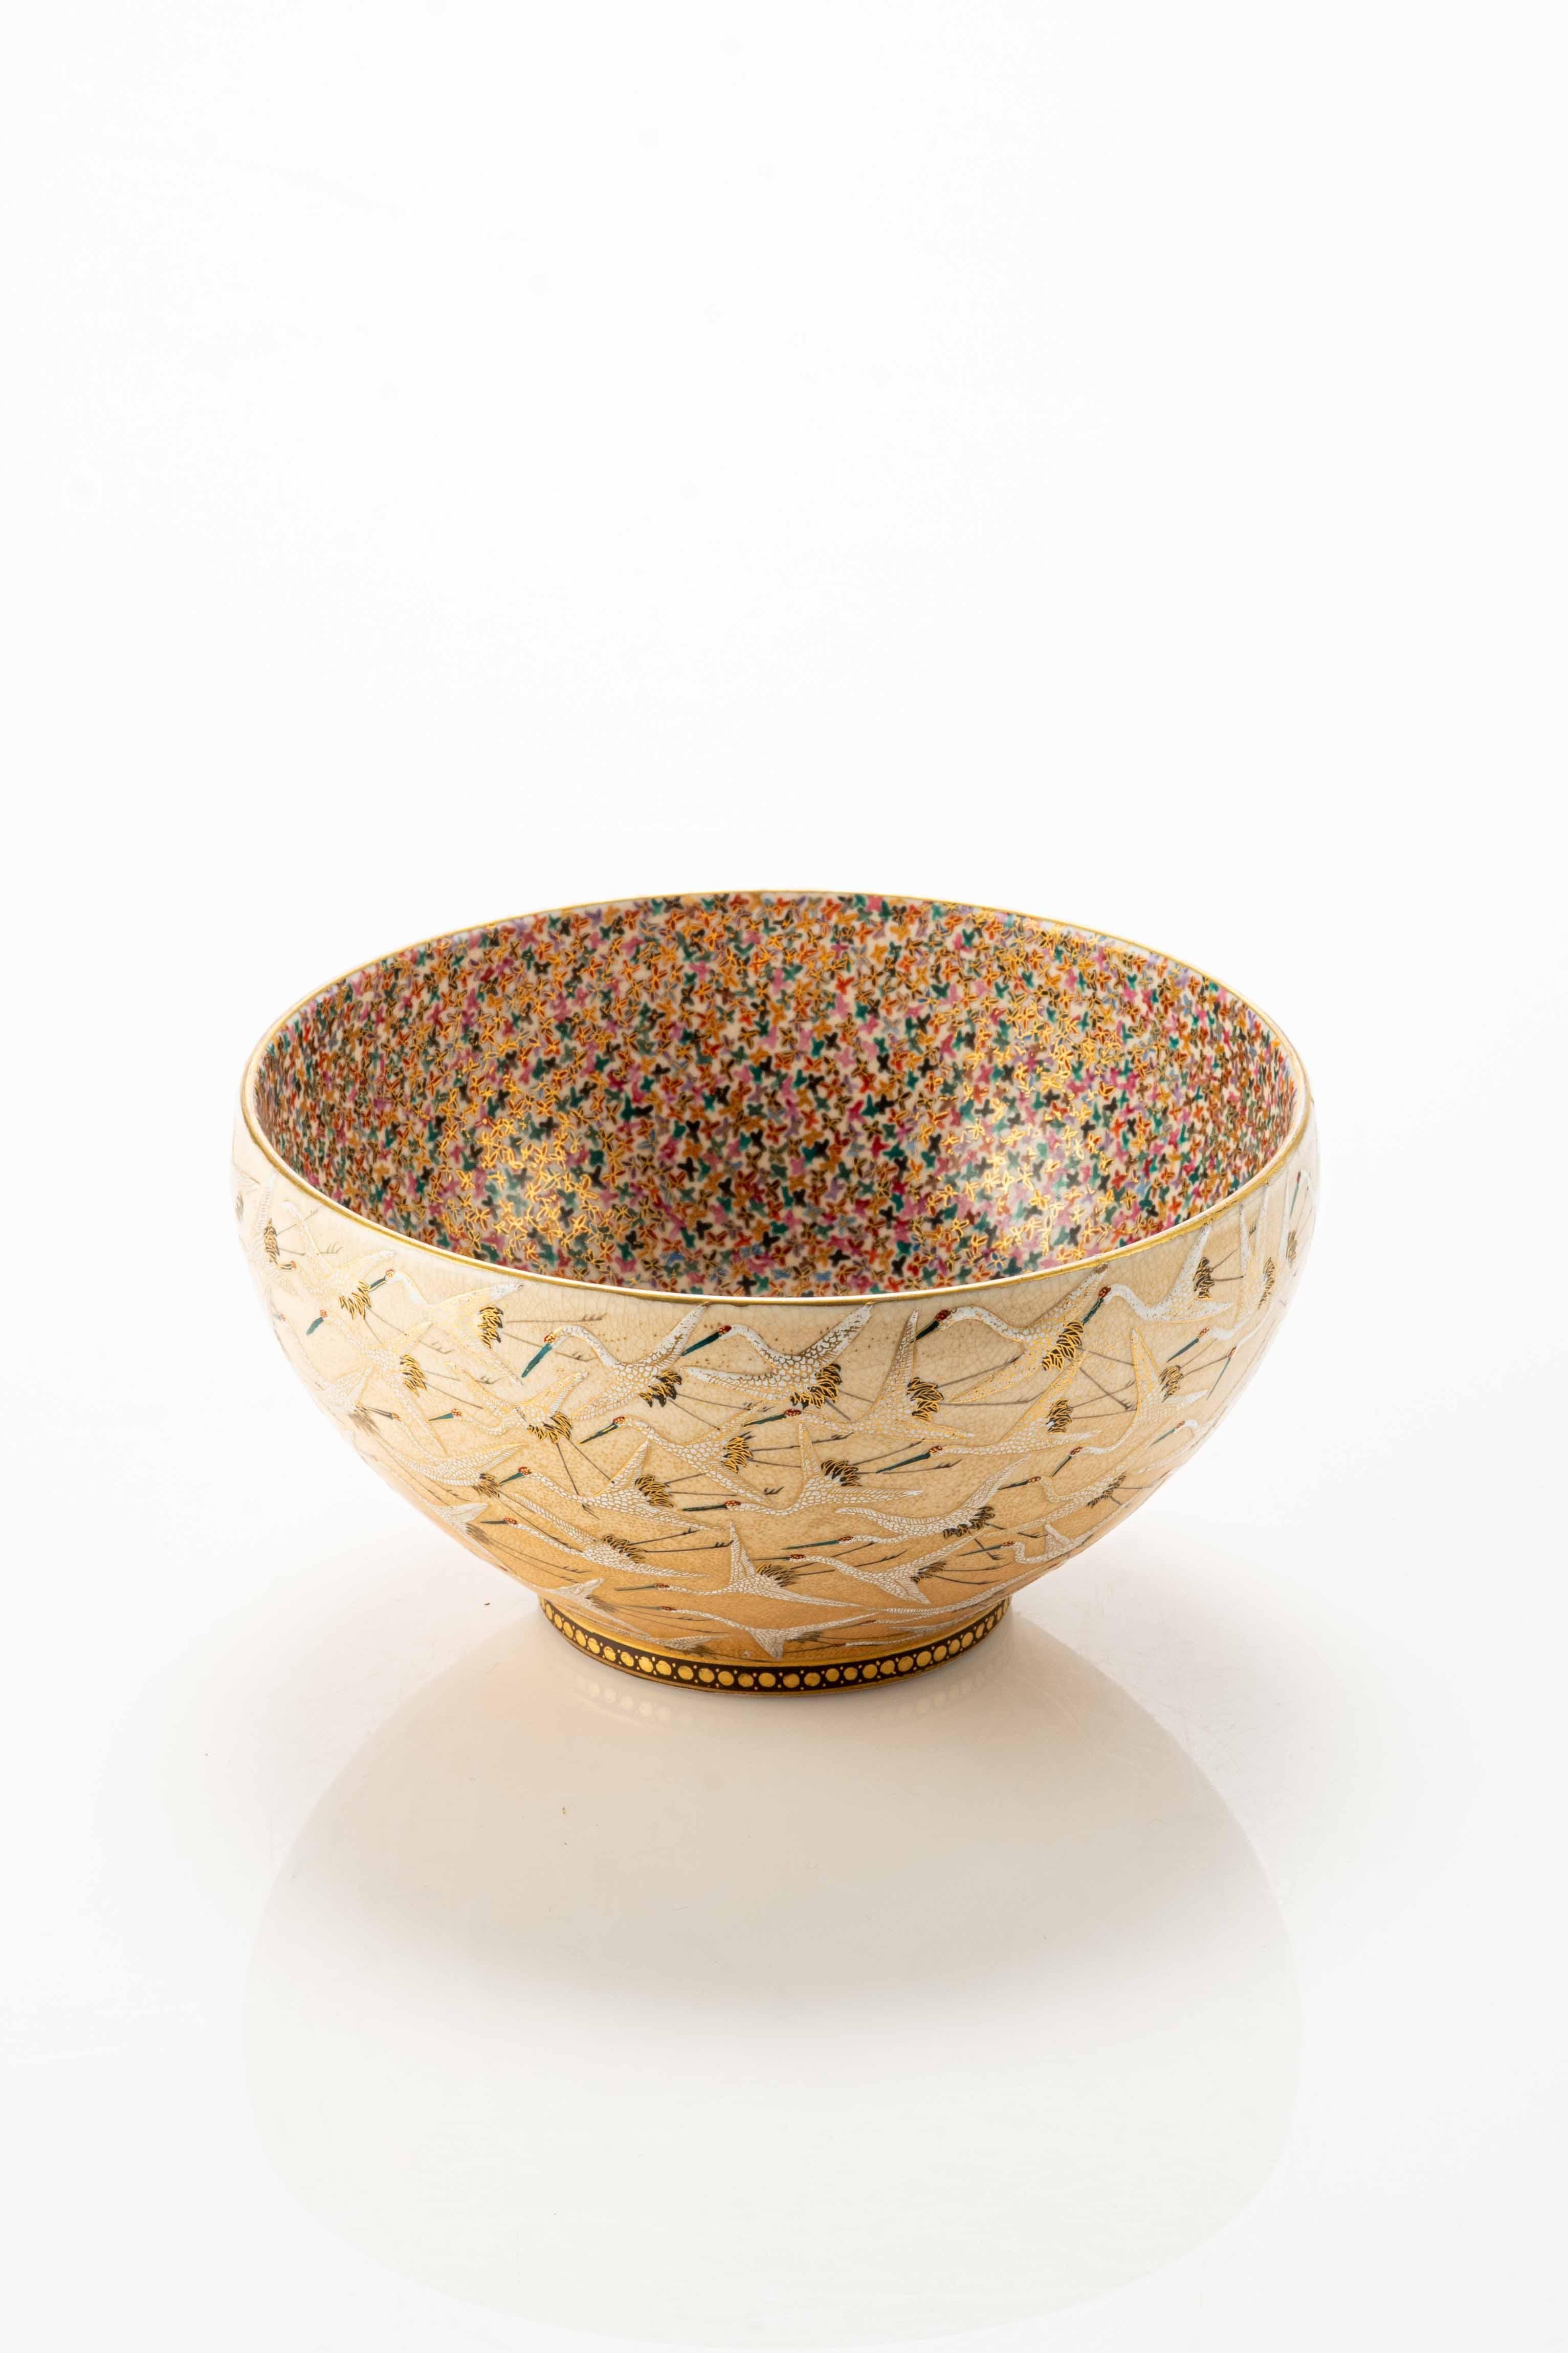 Japonisme A Japanese Satsuma ceramic bowl adorned with relief glazes and gold details For Sale